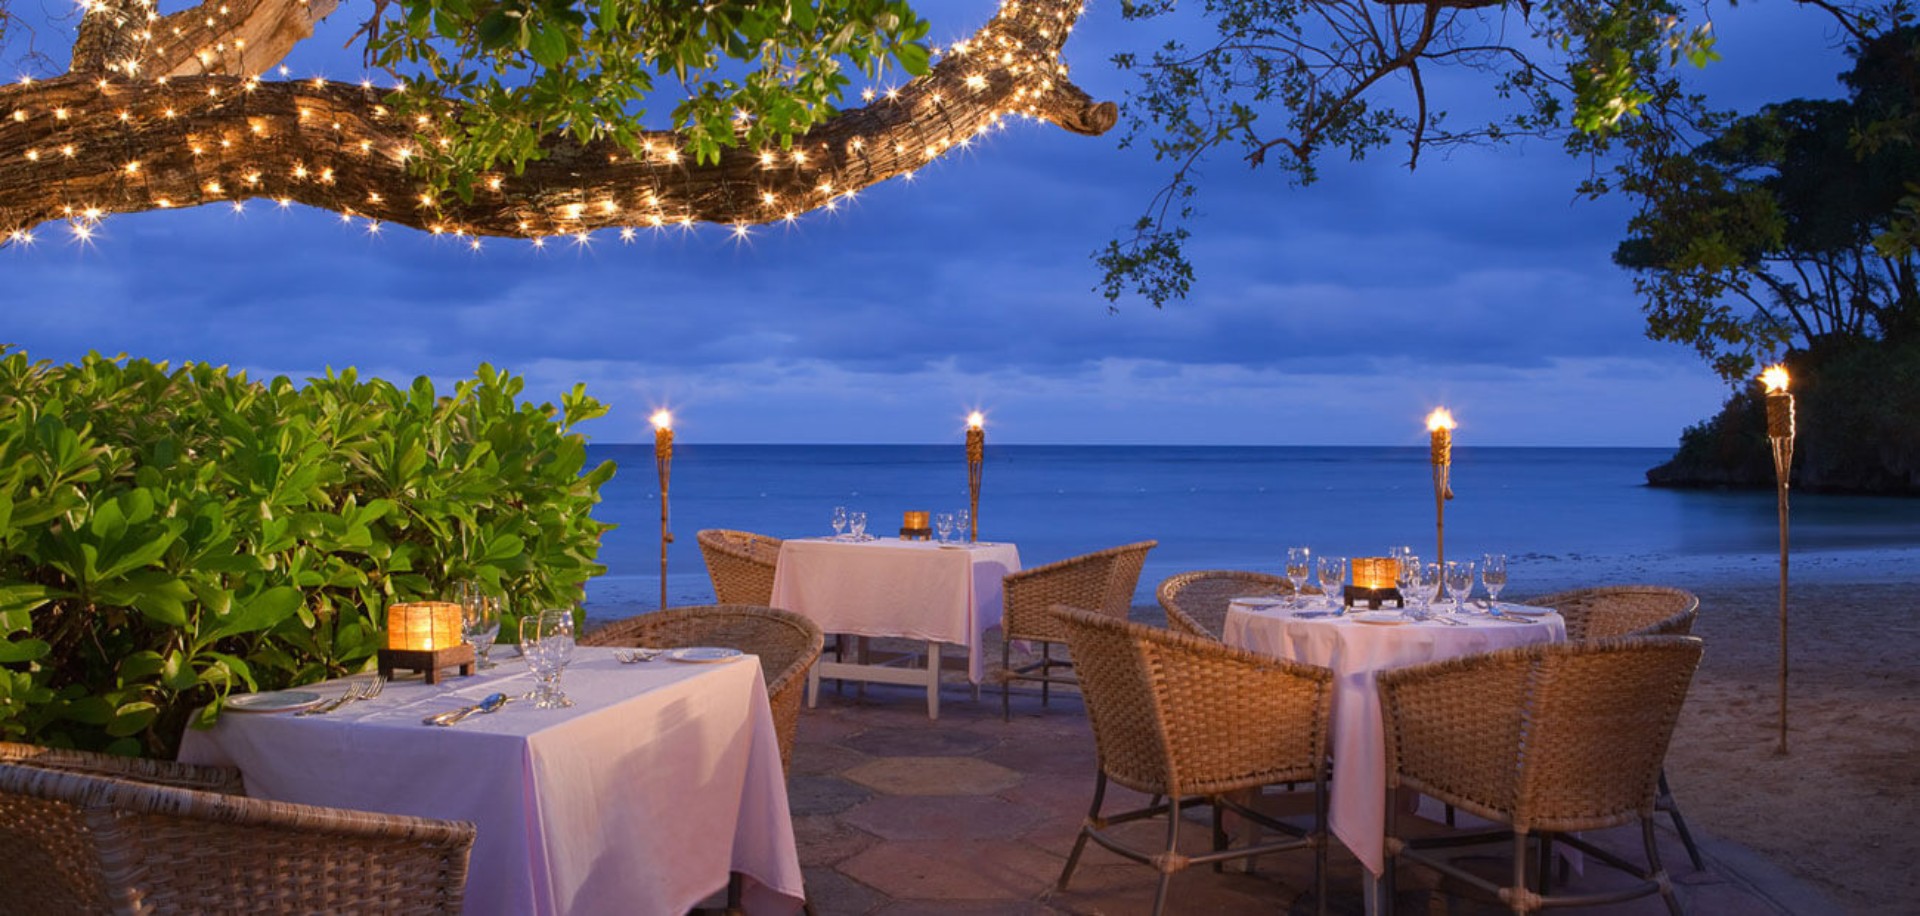 Top 10 Romantic AllInclusive Beach Resorts for Weddings